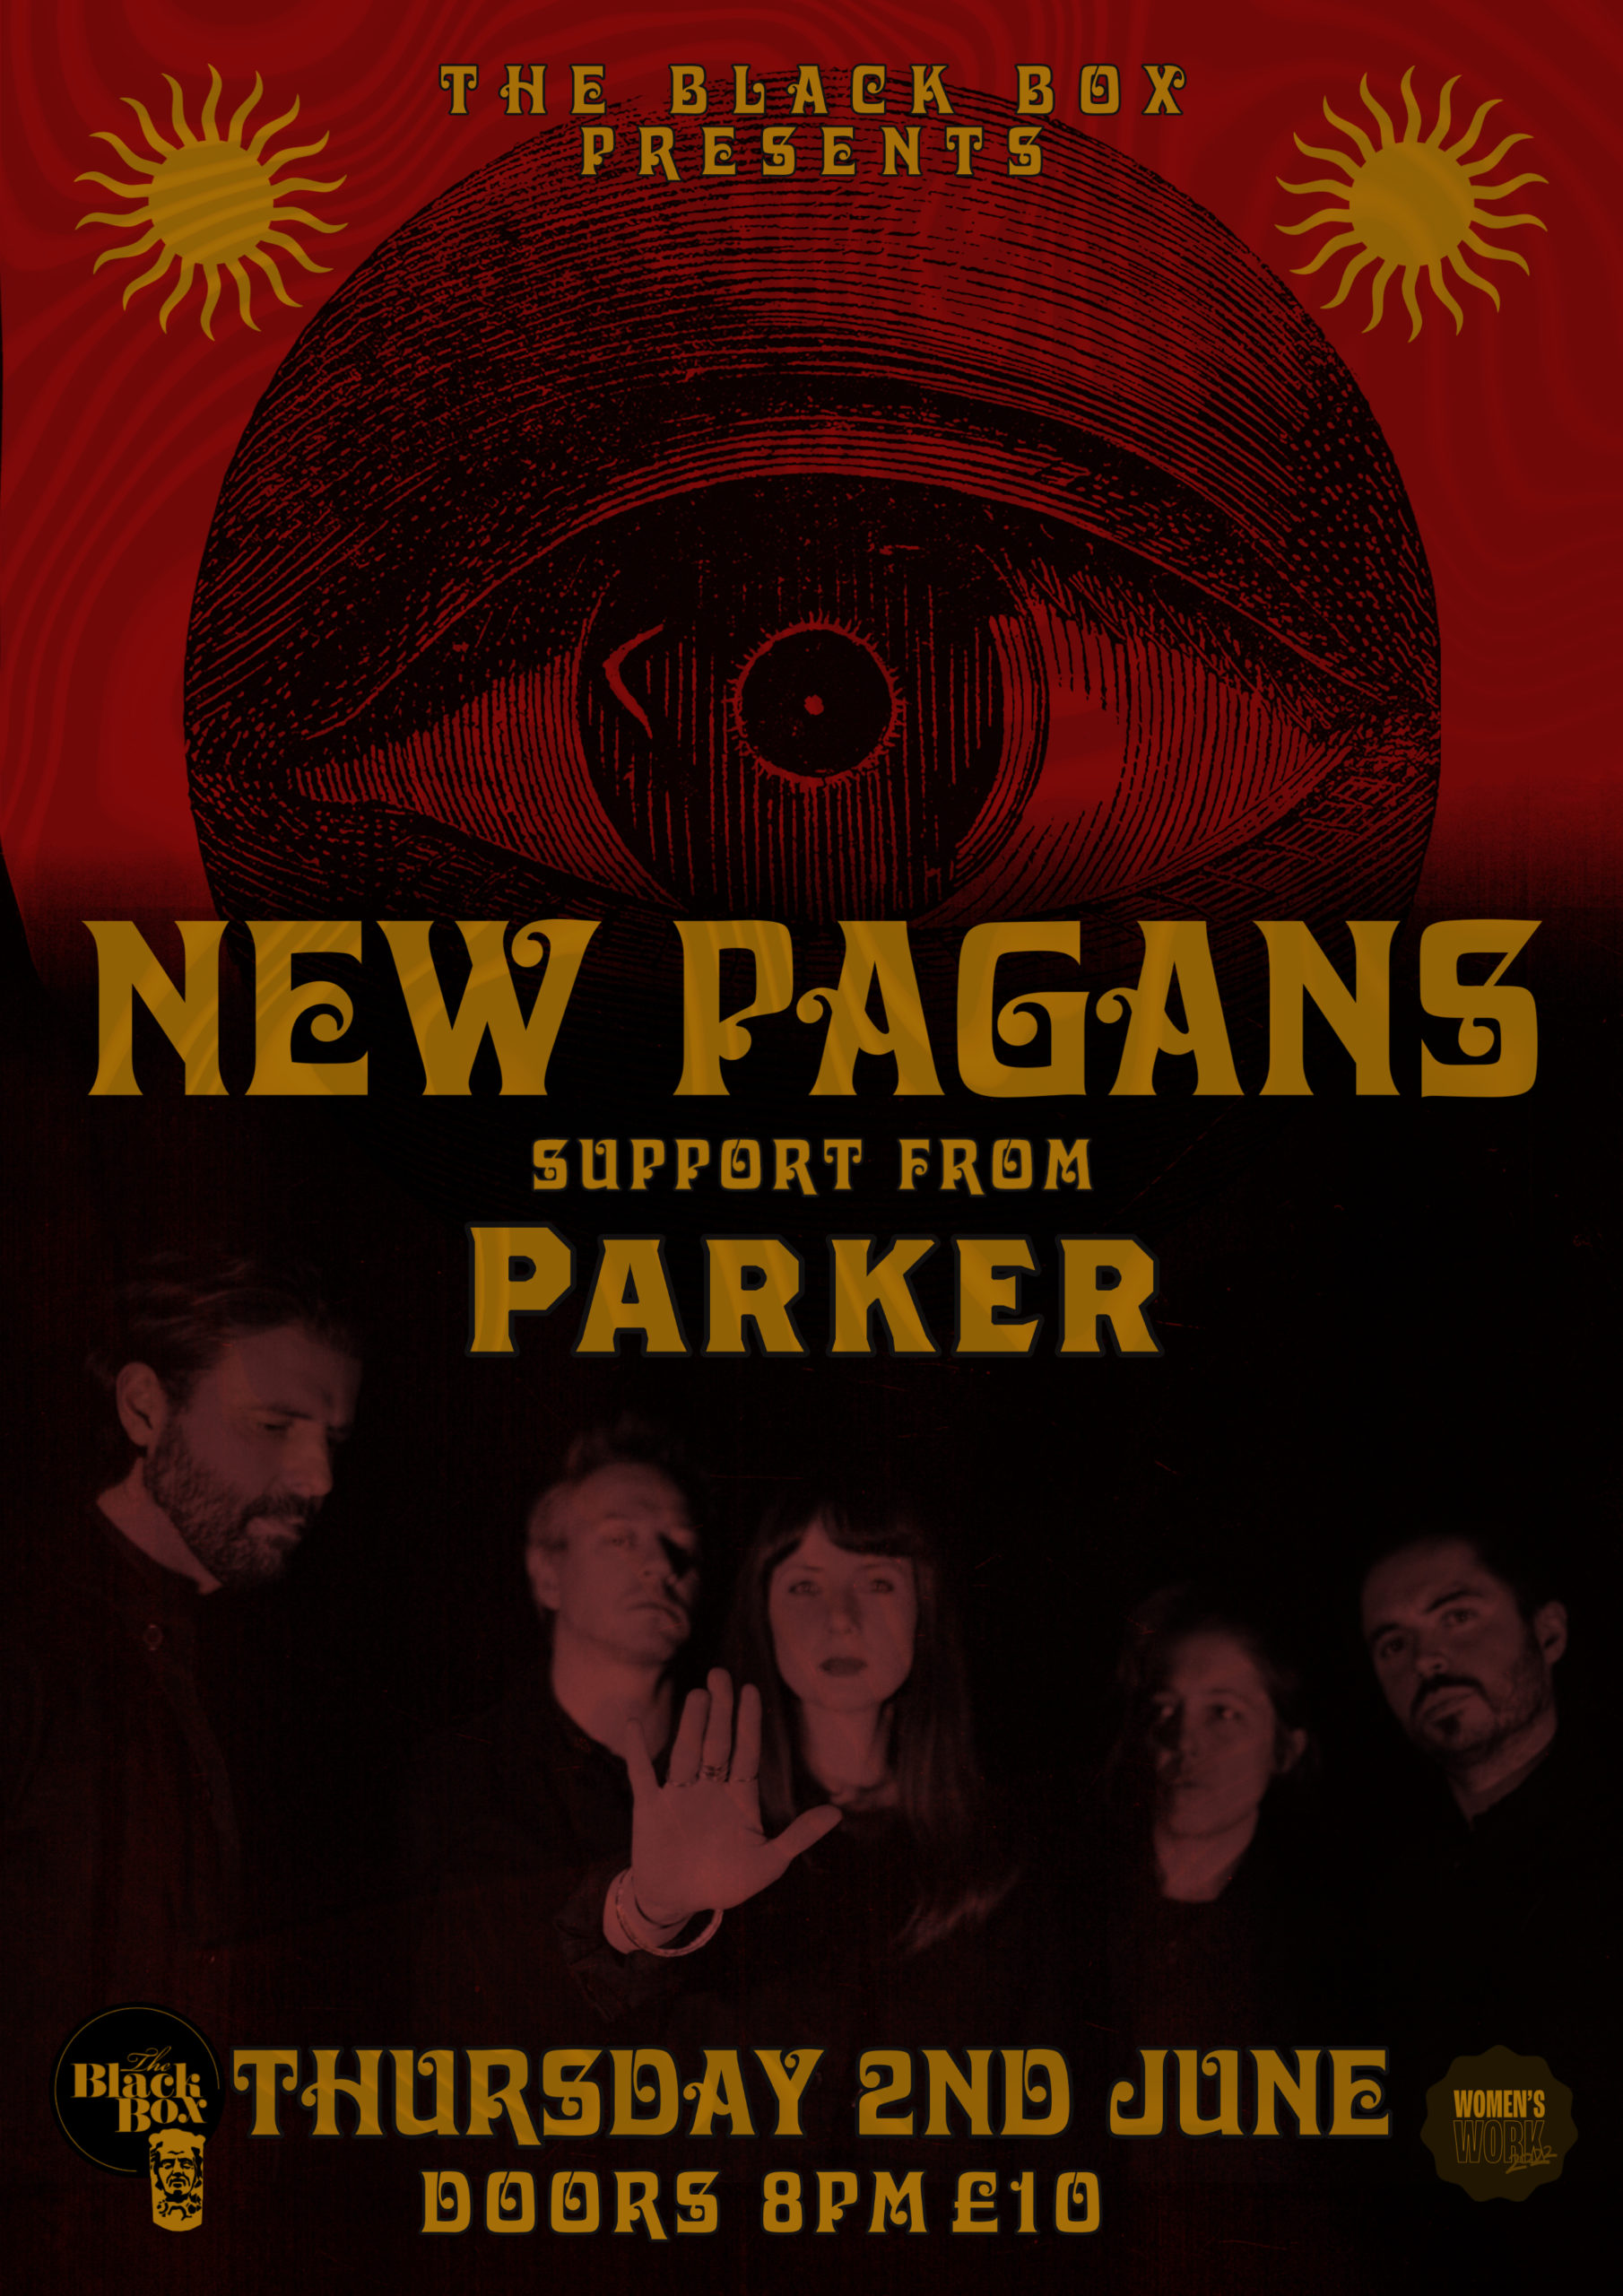 Black Box Presents: NEW PAGANS + Parker